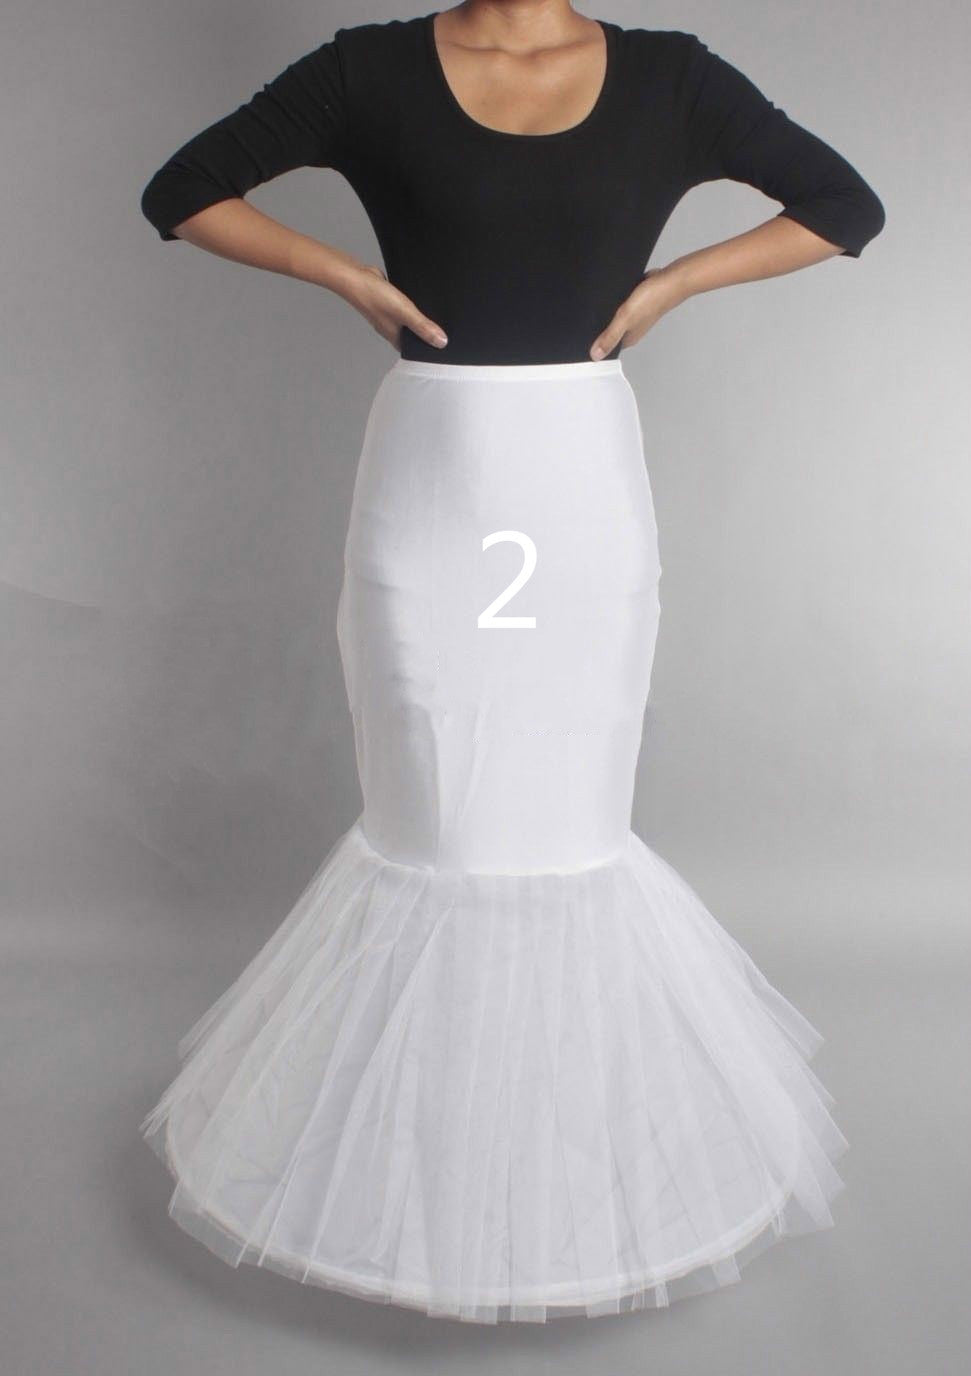 In Store Underskirt Bridal Dress Hoop Slips Wedding Petticoat Crinoline Slip PromB